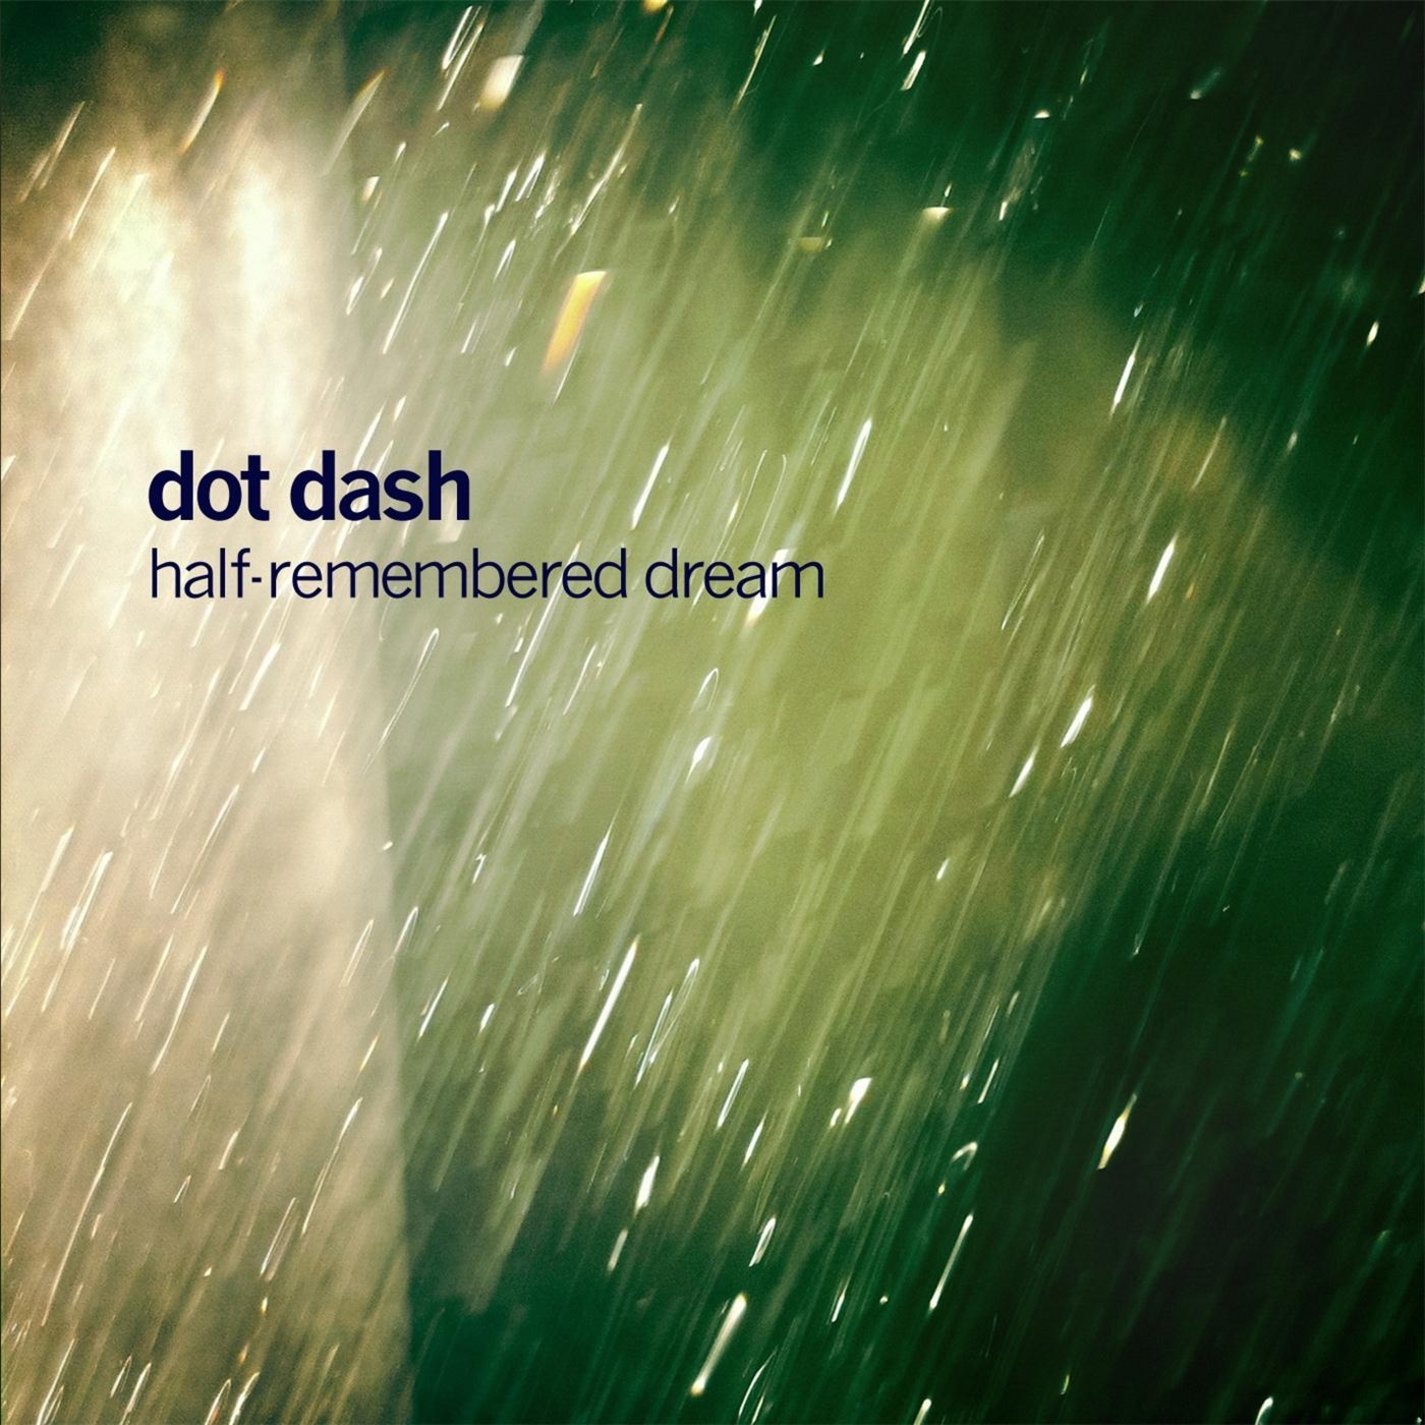 Dot Dash